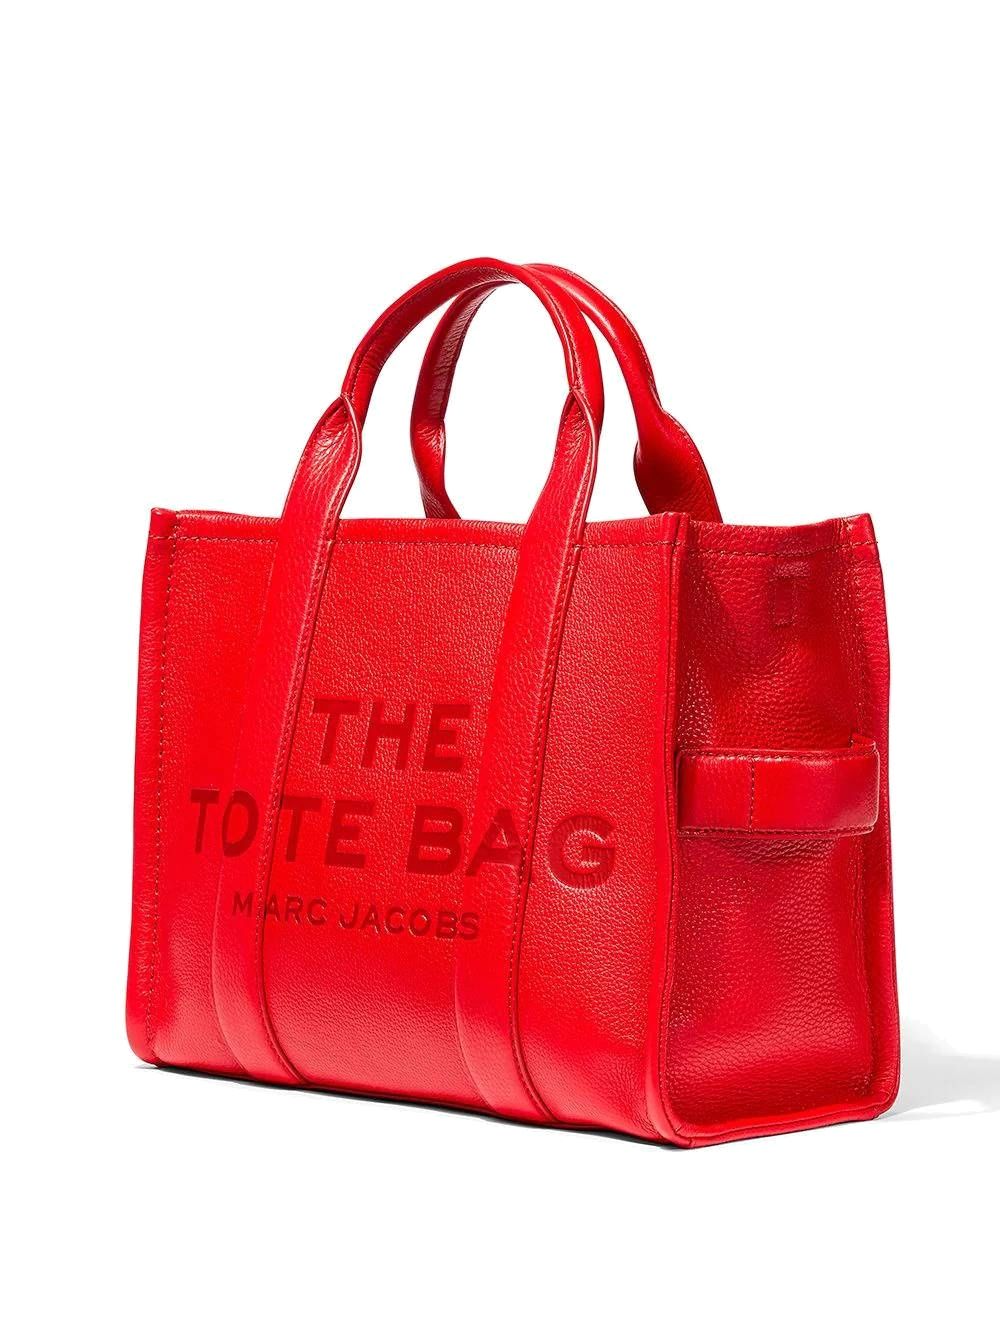 The Leather medium tote bag